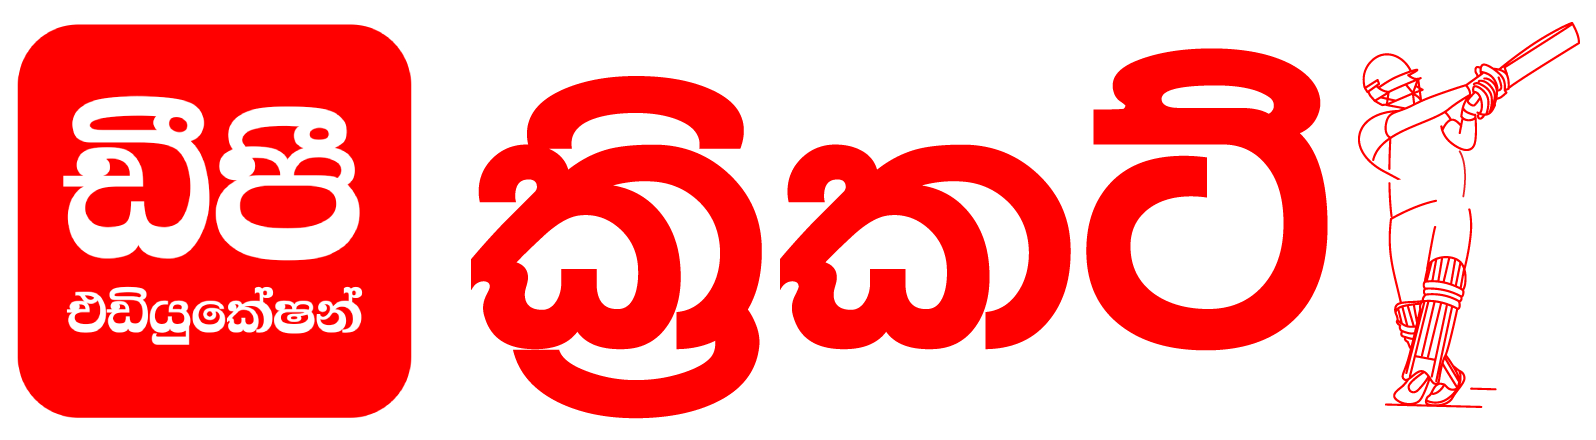 Brand logo-24